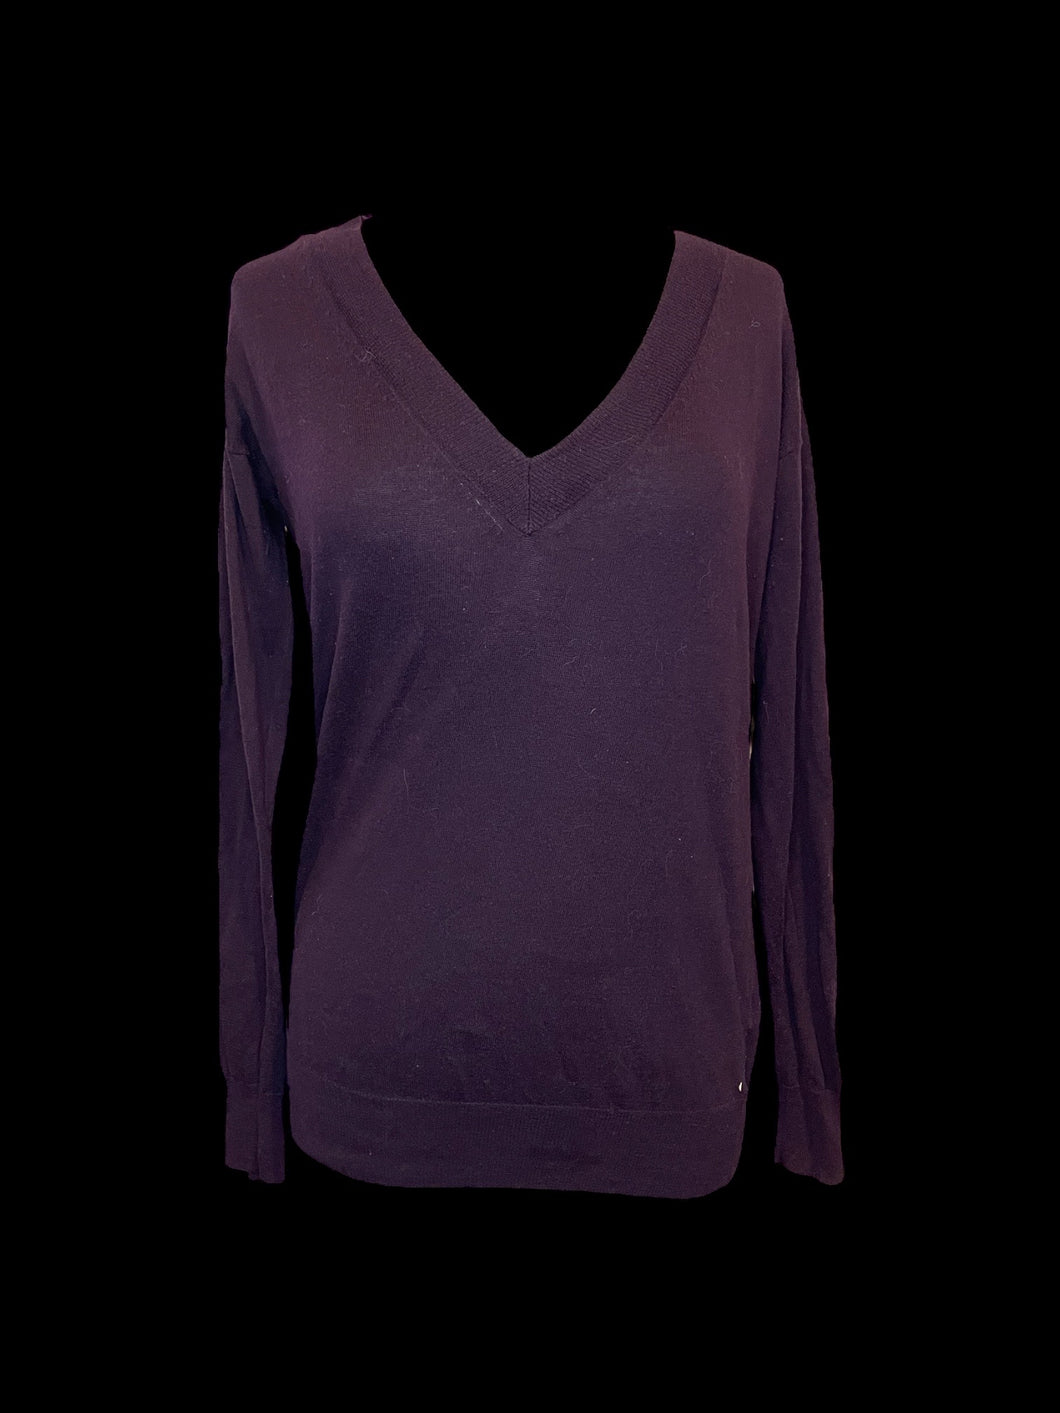 L Plum cotton/cashmere blend knit long sleeve v-neckline ribbed hem top